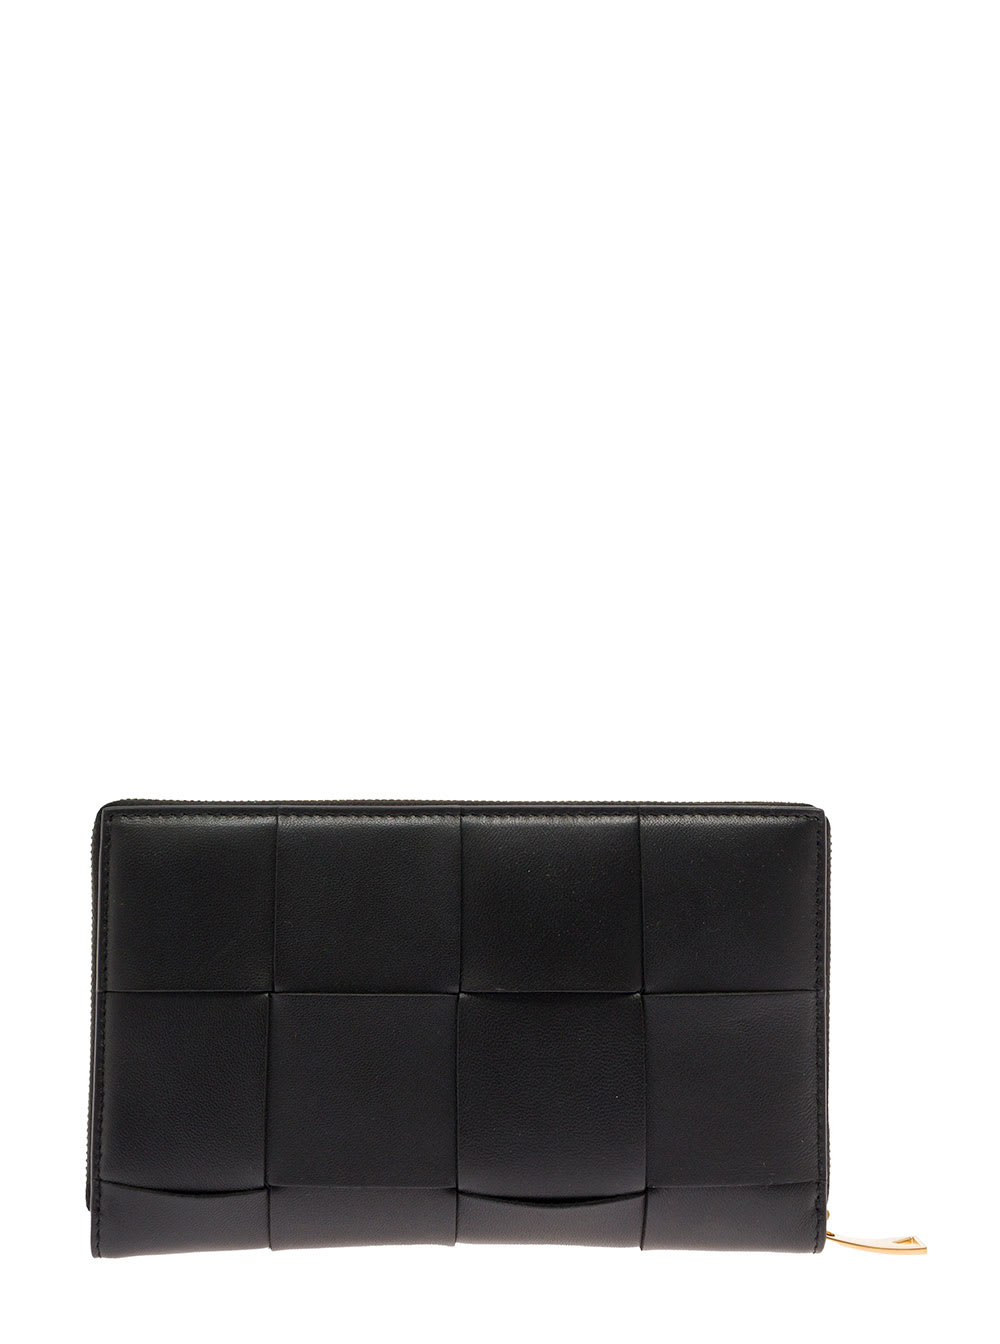 Black Intreccio Nappa Leather Wallet Bottega Veneta Woman